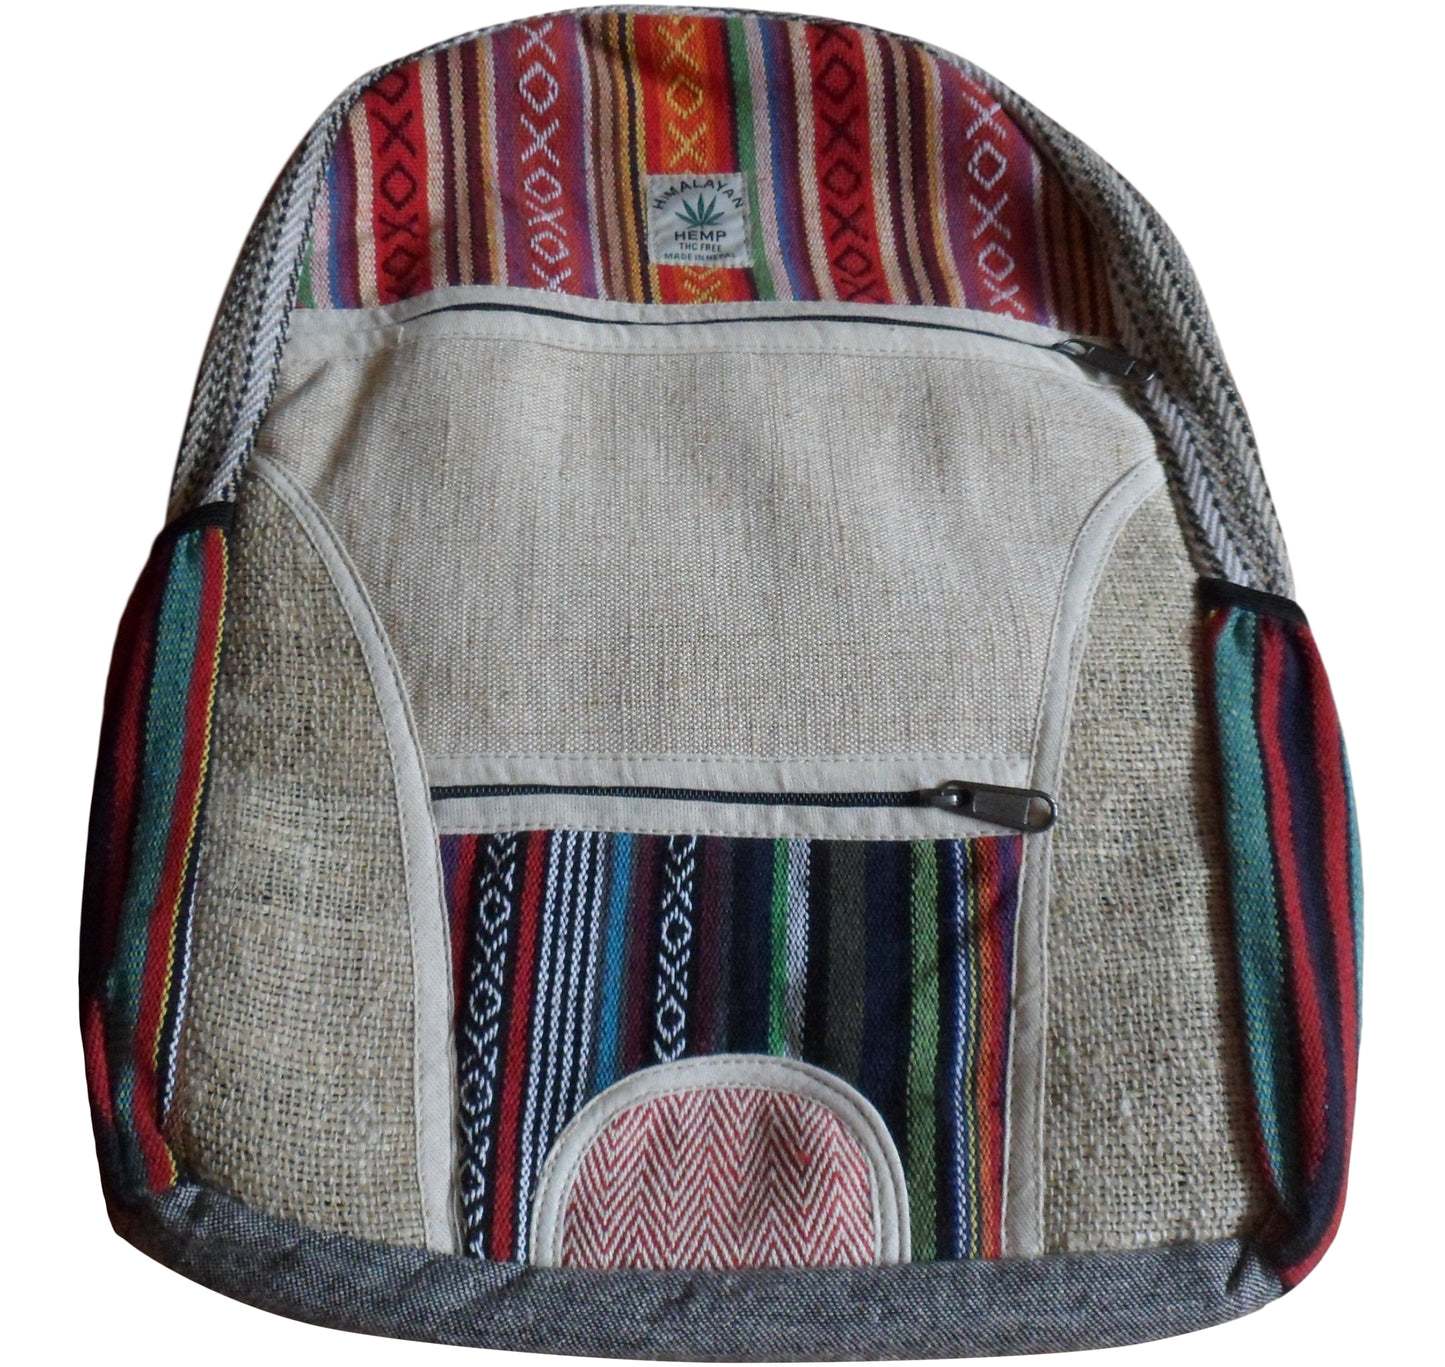 Fair Trade Cotton & Hemp Gheri Weave Hippy Boho Backpack Rucksack Travel Bag